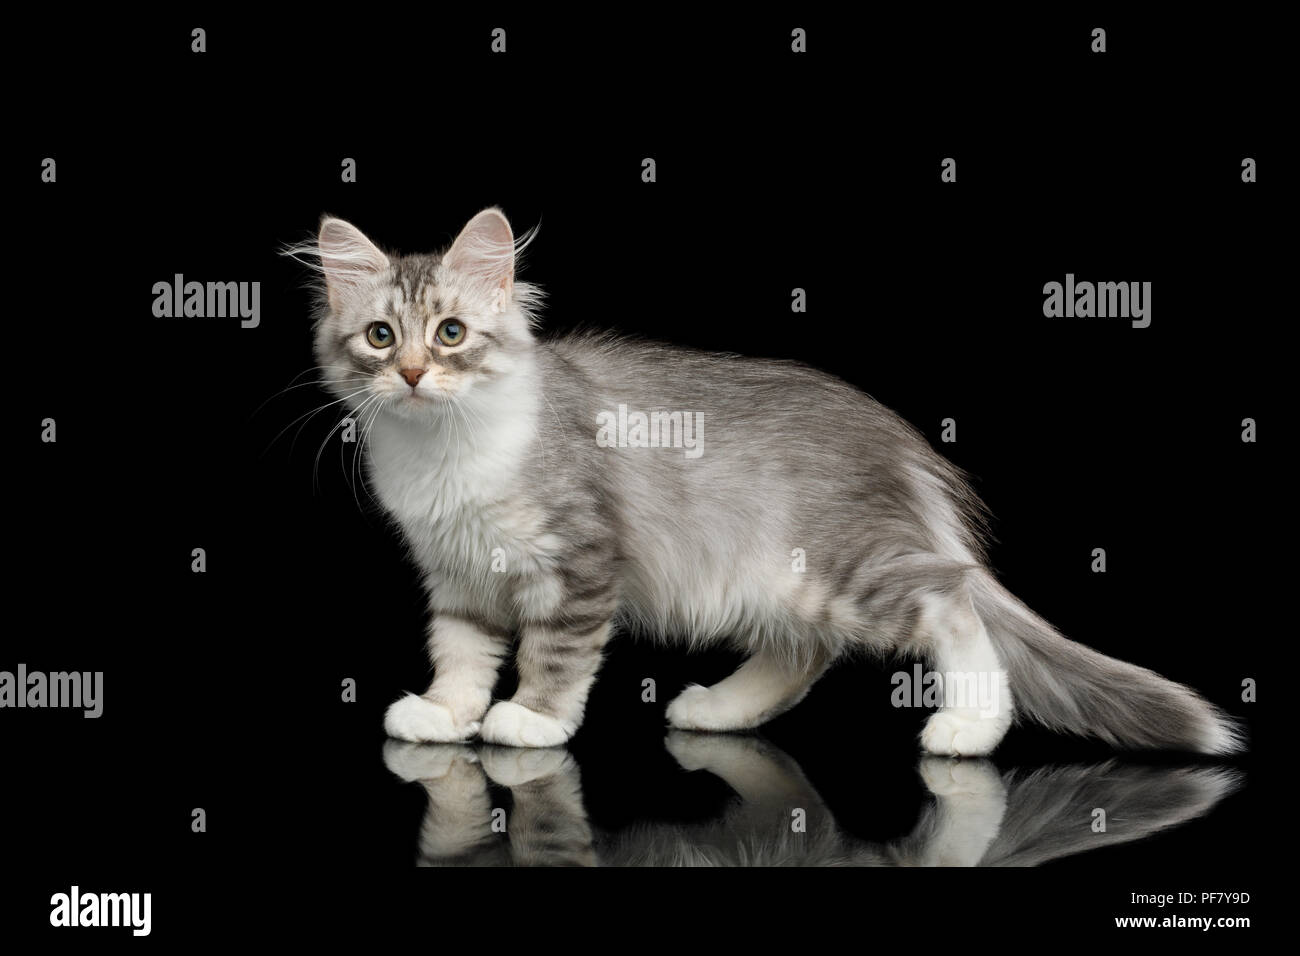 Silver Tabby Siberian kitten con pelaje lanudo y mirando al lado permanente sobre fondo negro con reflexión aislado Foto de stock